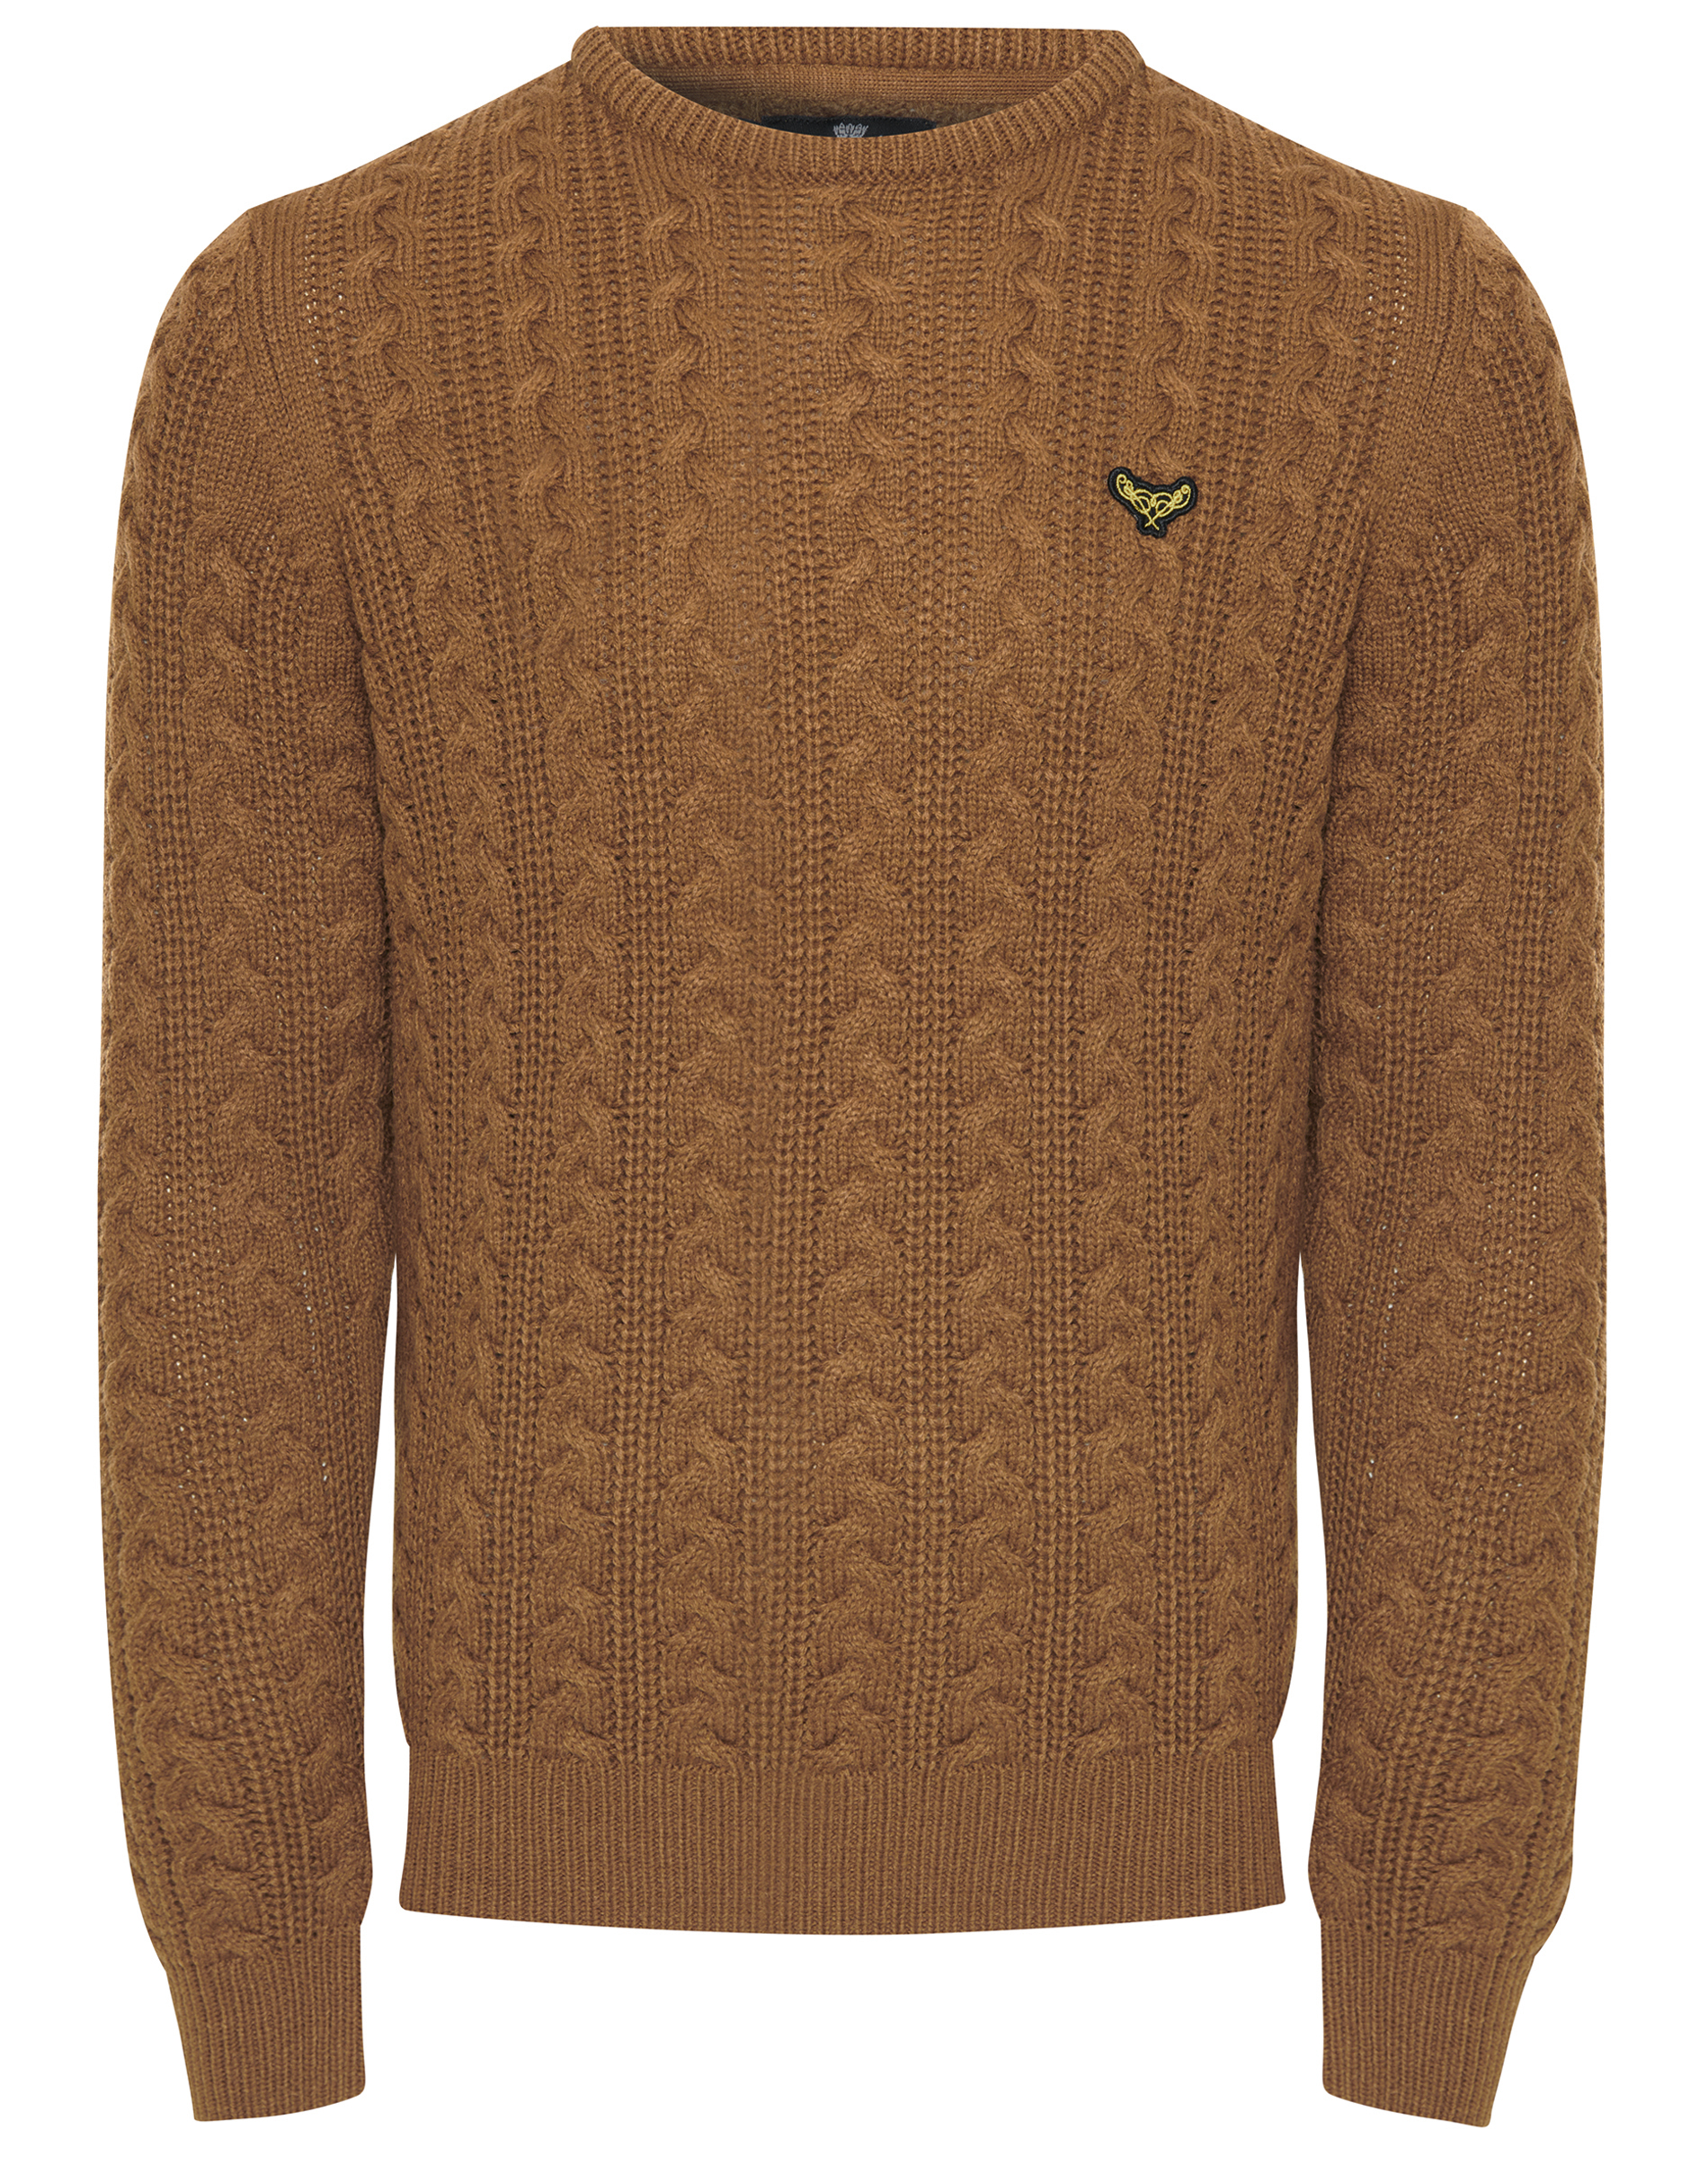 Пуловер Threadbare Strick Ely, коричневый пуловер threadbare strick reed черный